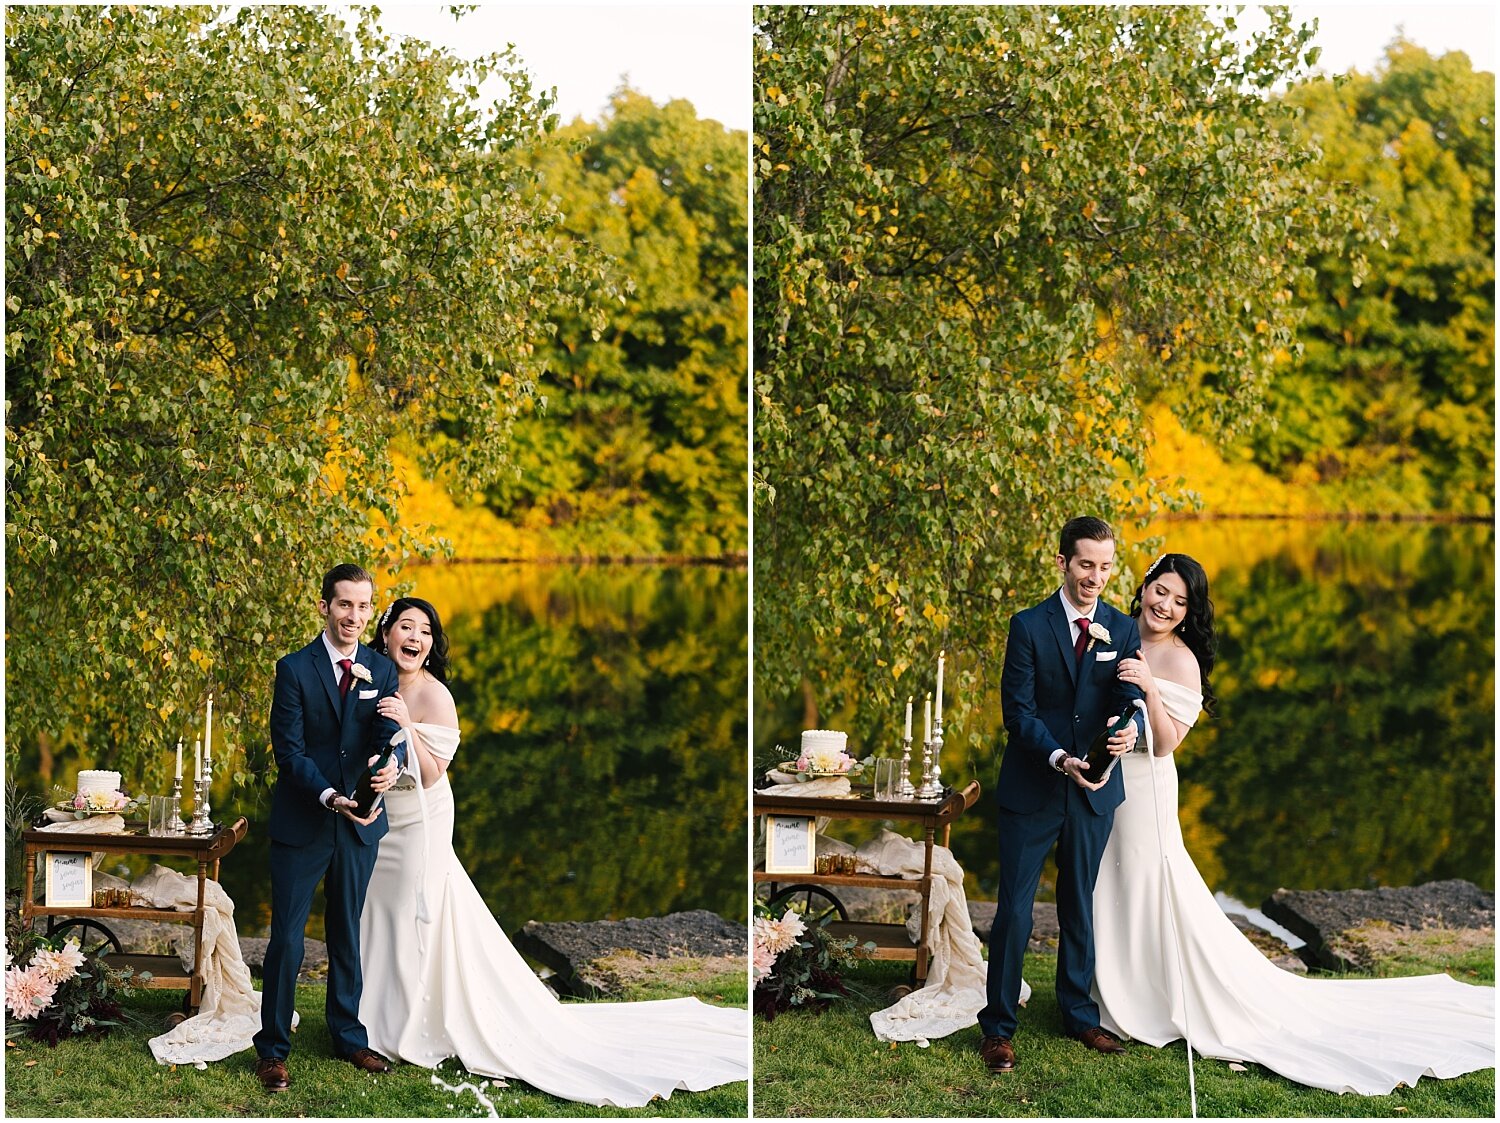 shadow+lake+golf+wedding+rochester+photographer (12).jpg